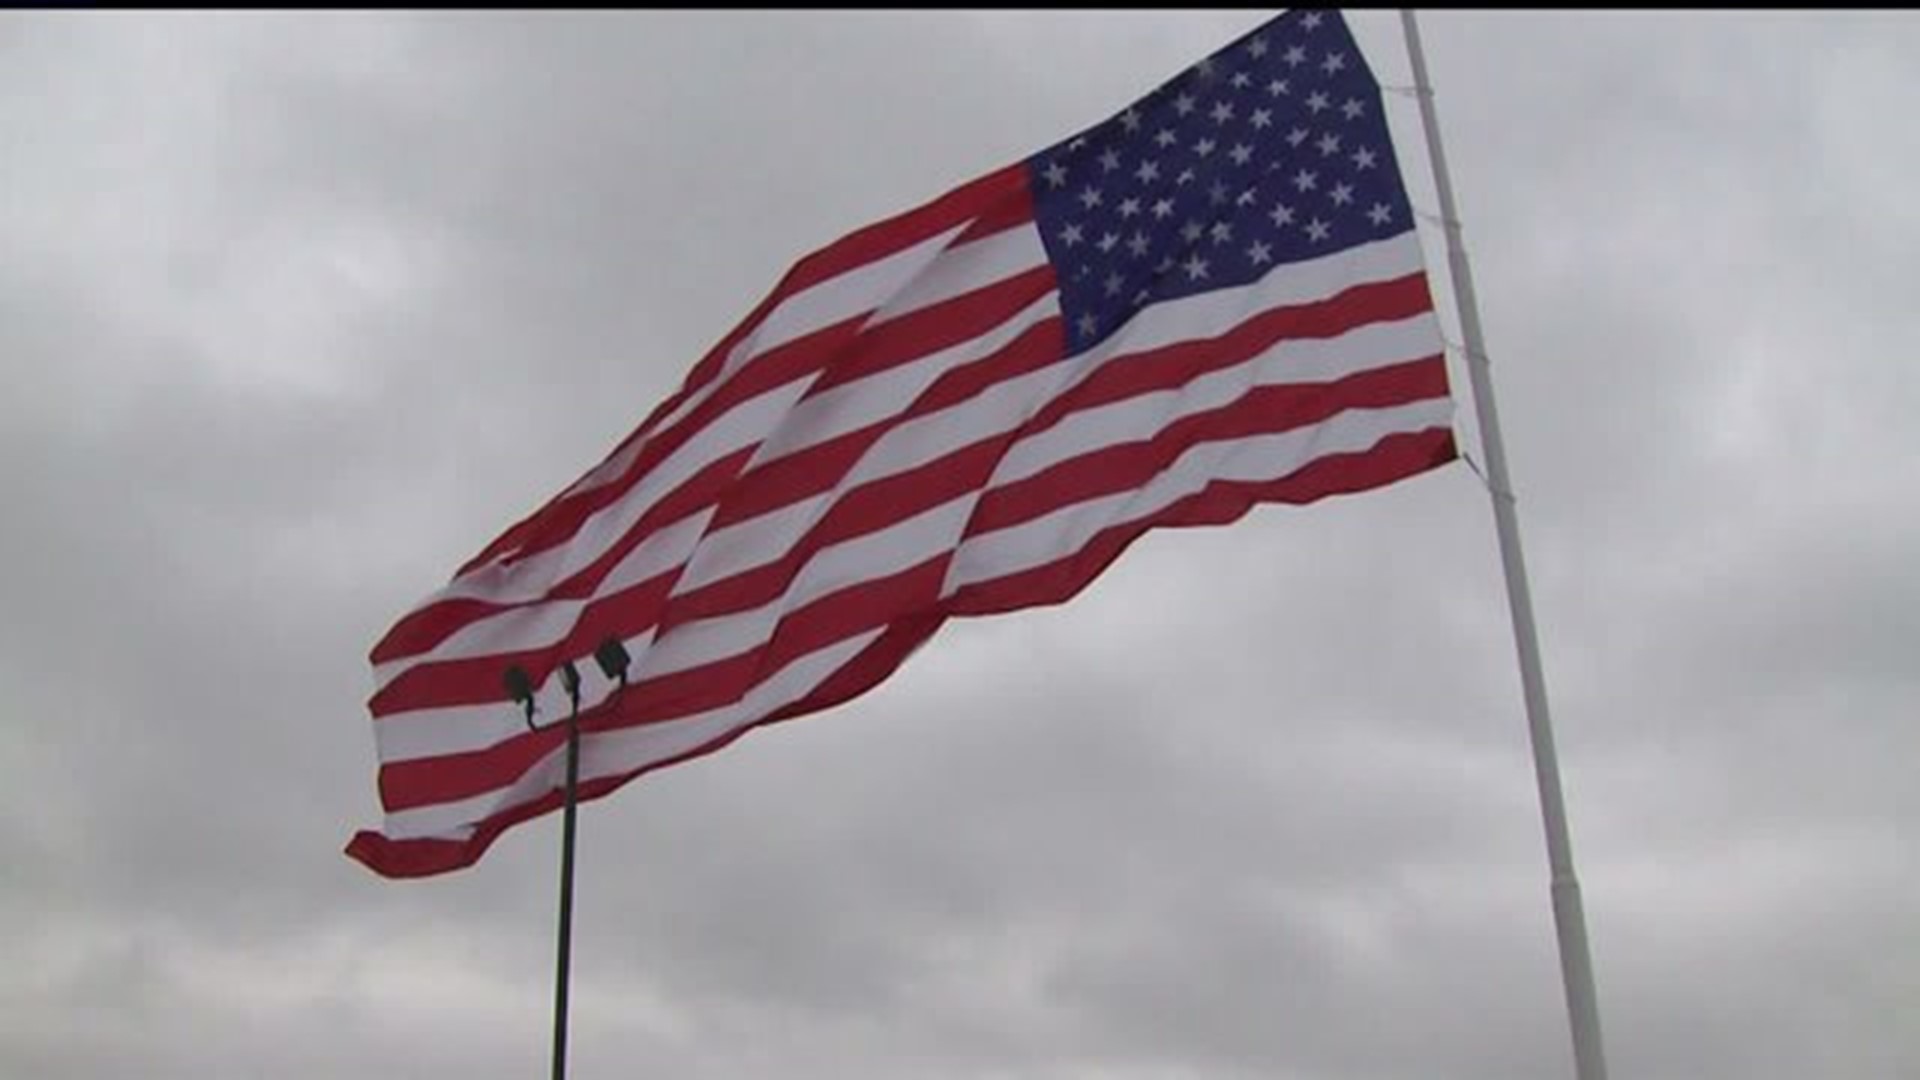 Giant flag raised for new business